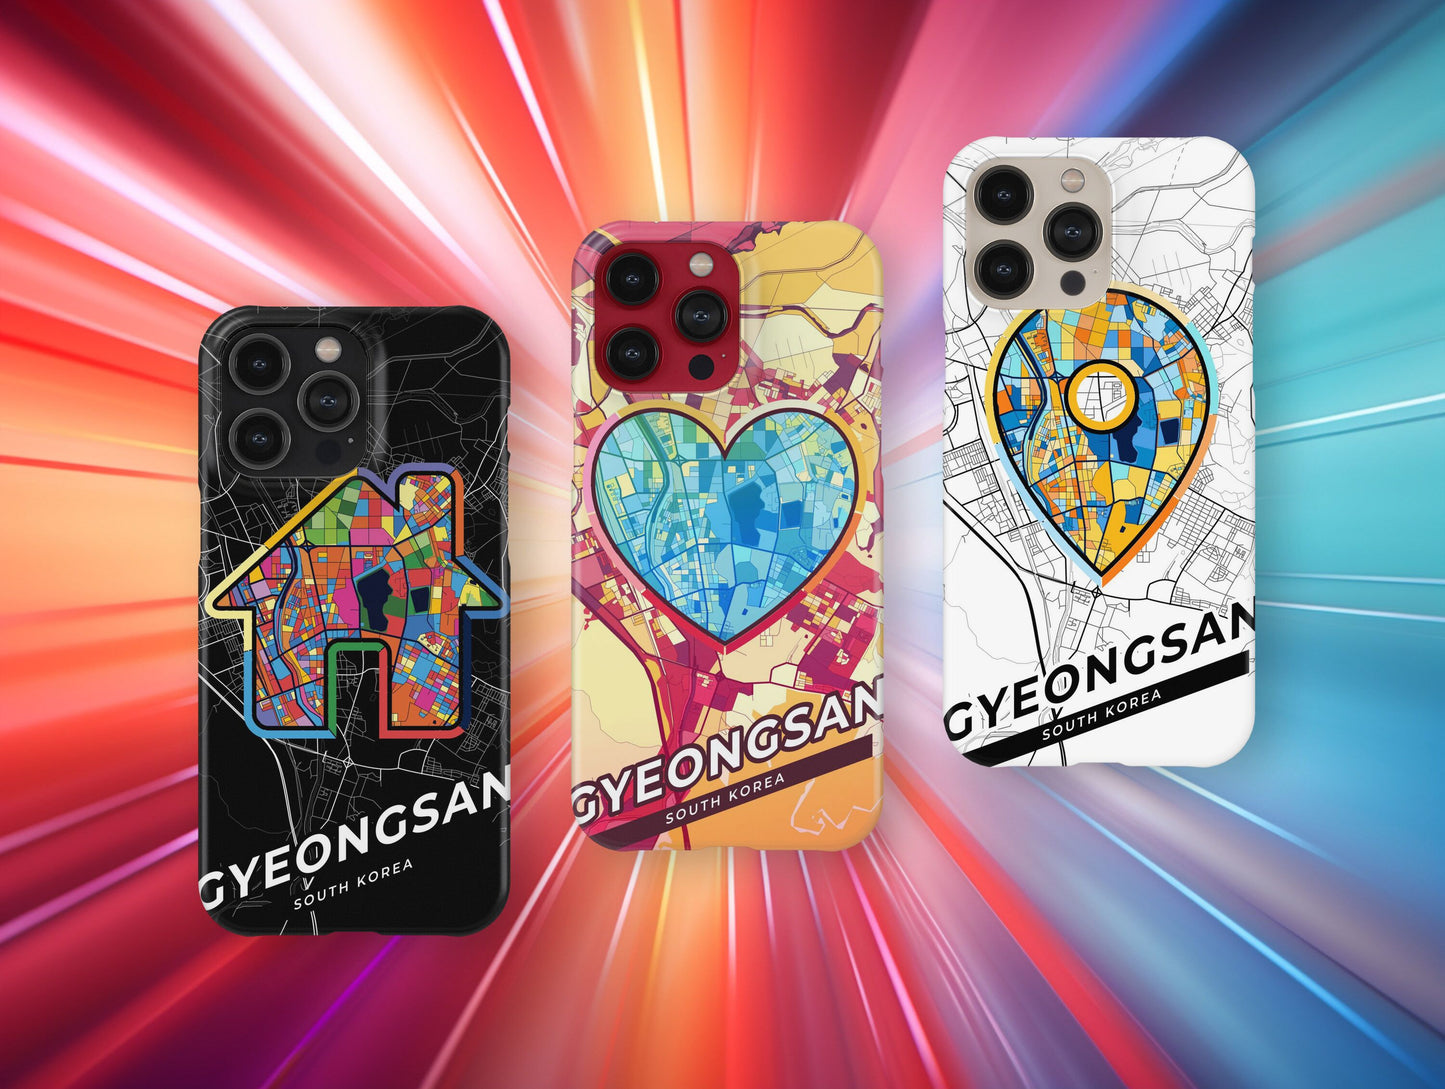 Gyeongsan South Korea slim phone case with colorful icon. Birthday, wedding or housewarming gift. Couple match cases.